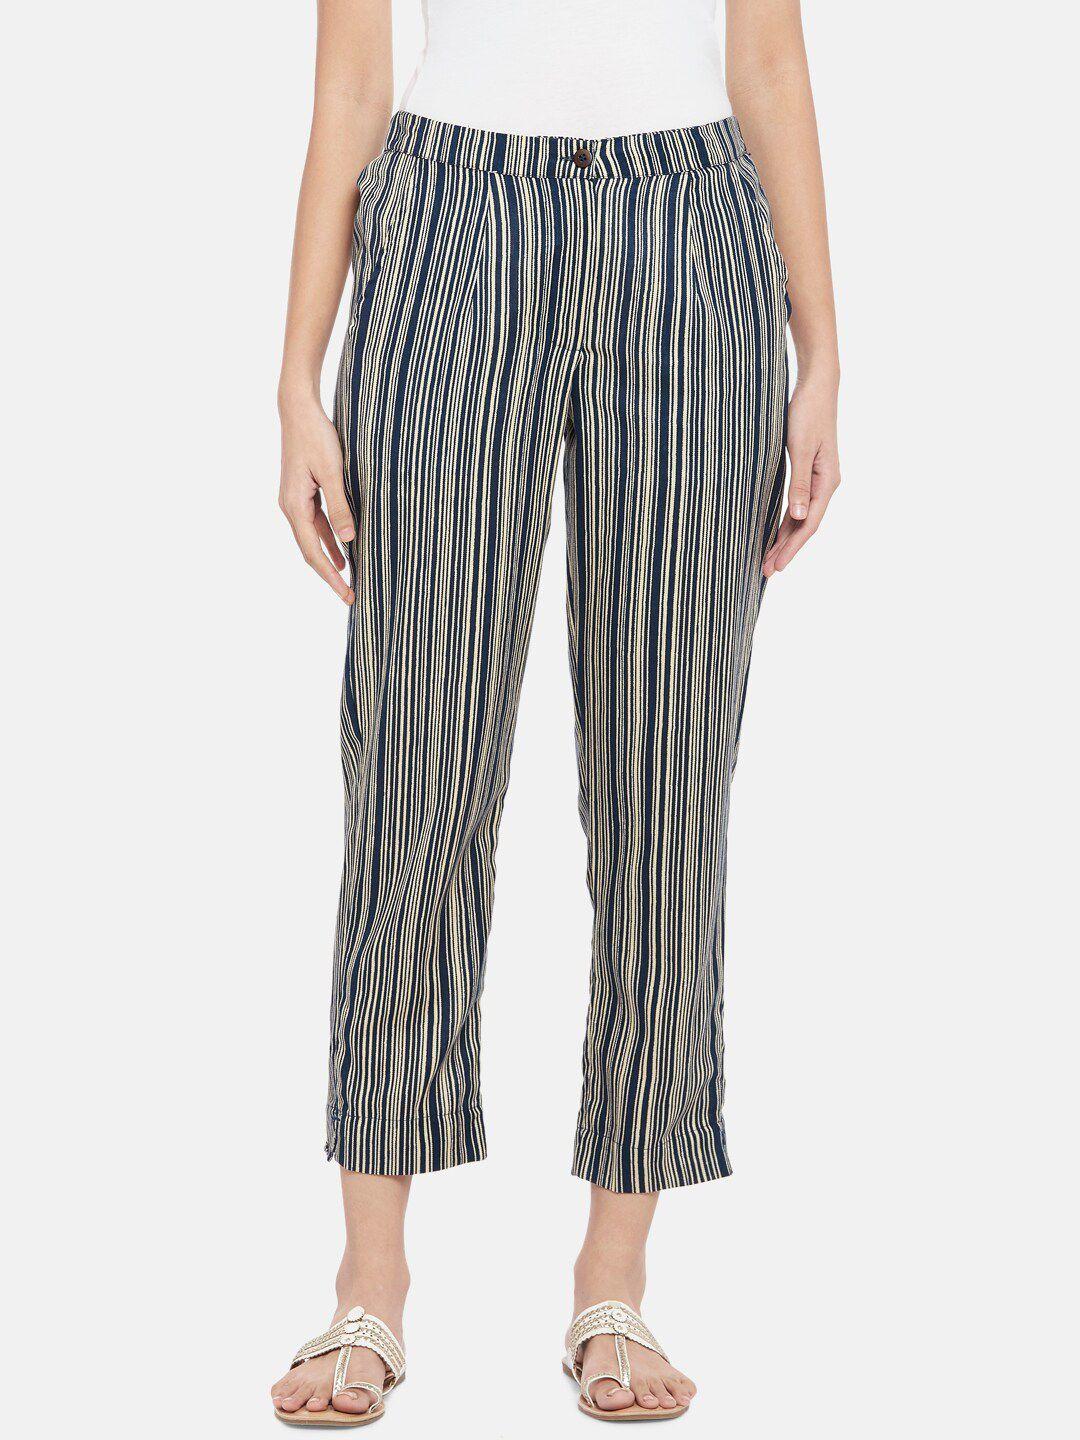 akkriti by pantaloons women blue striped trousers